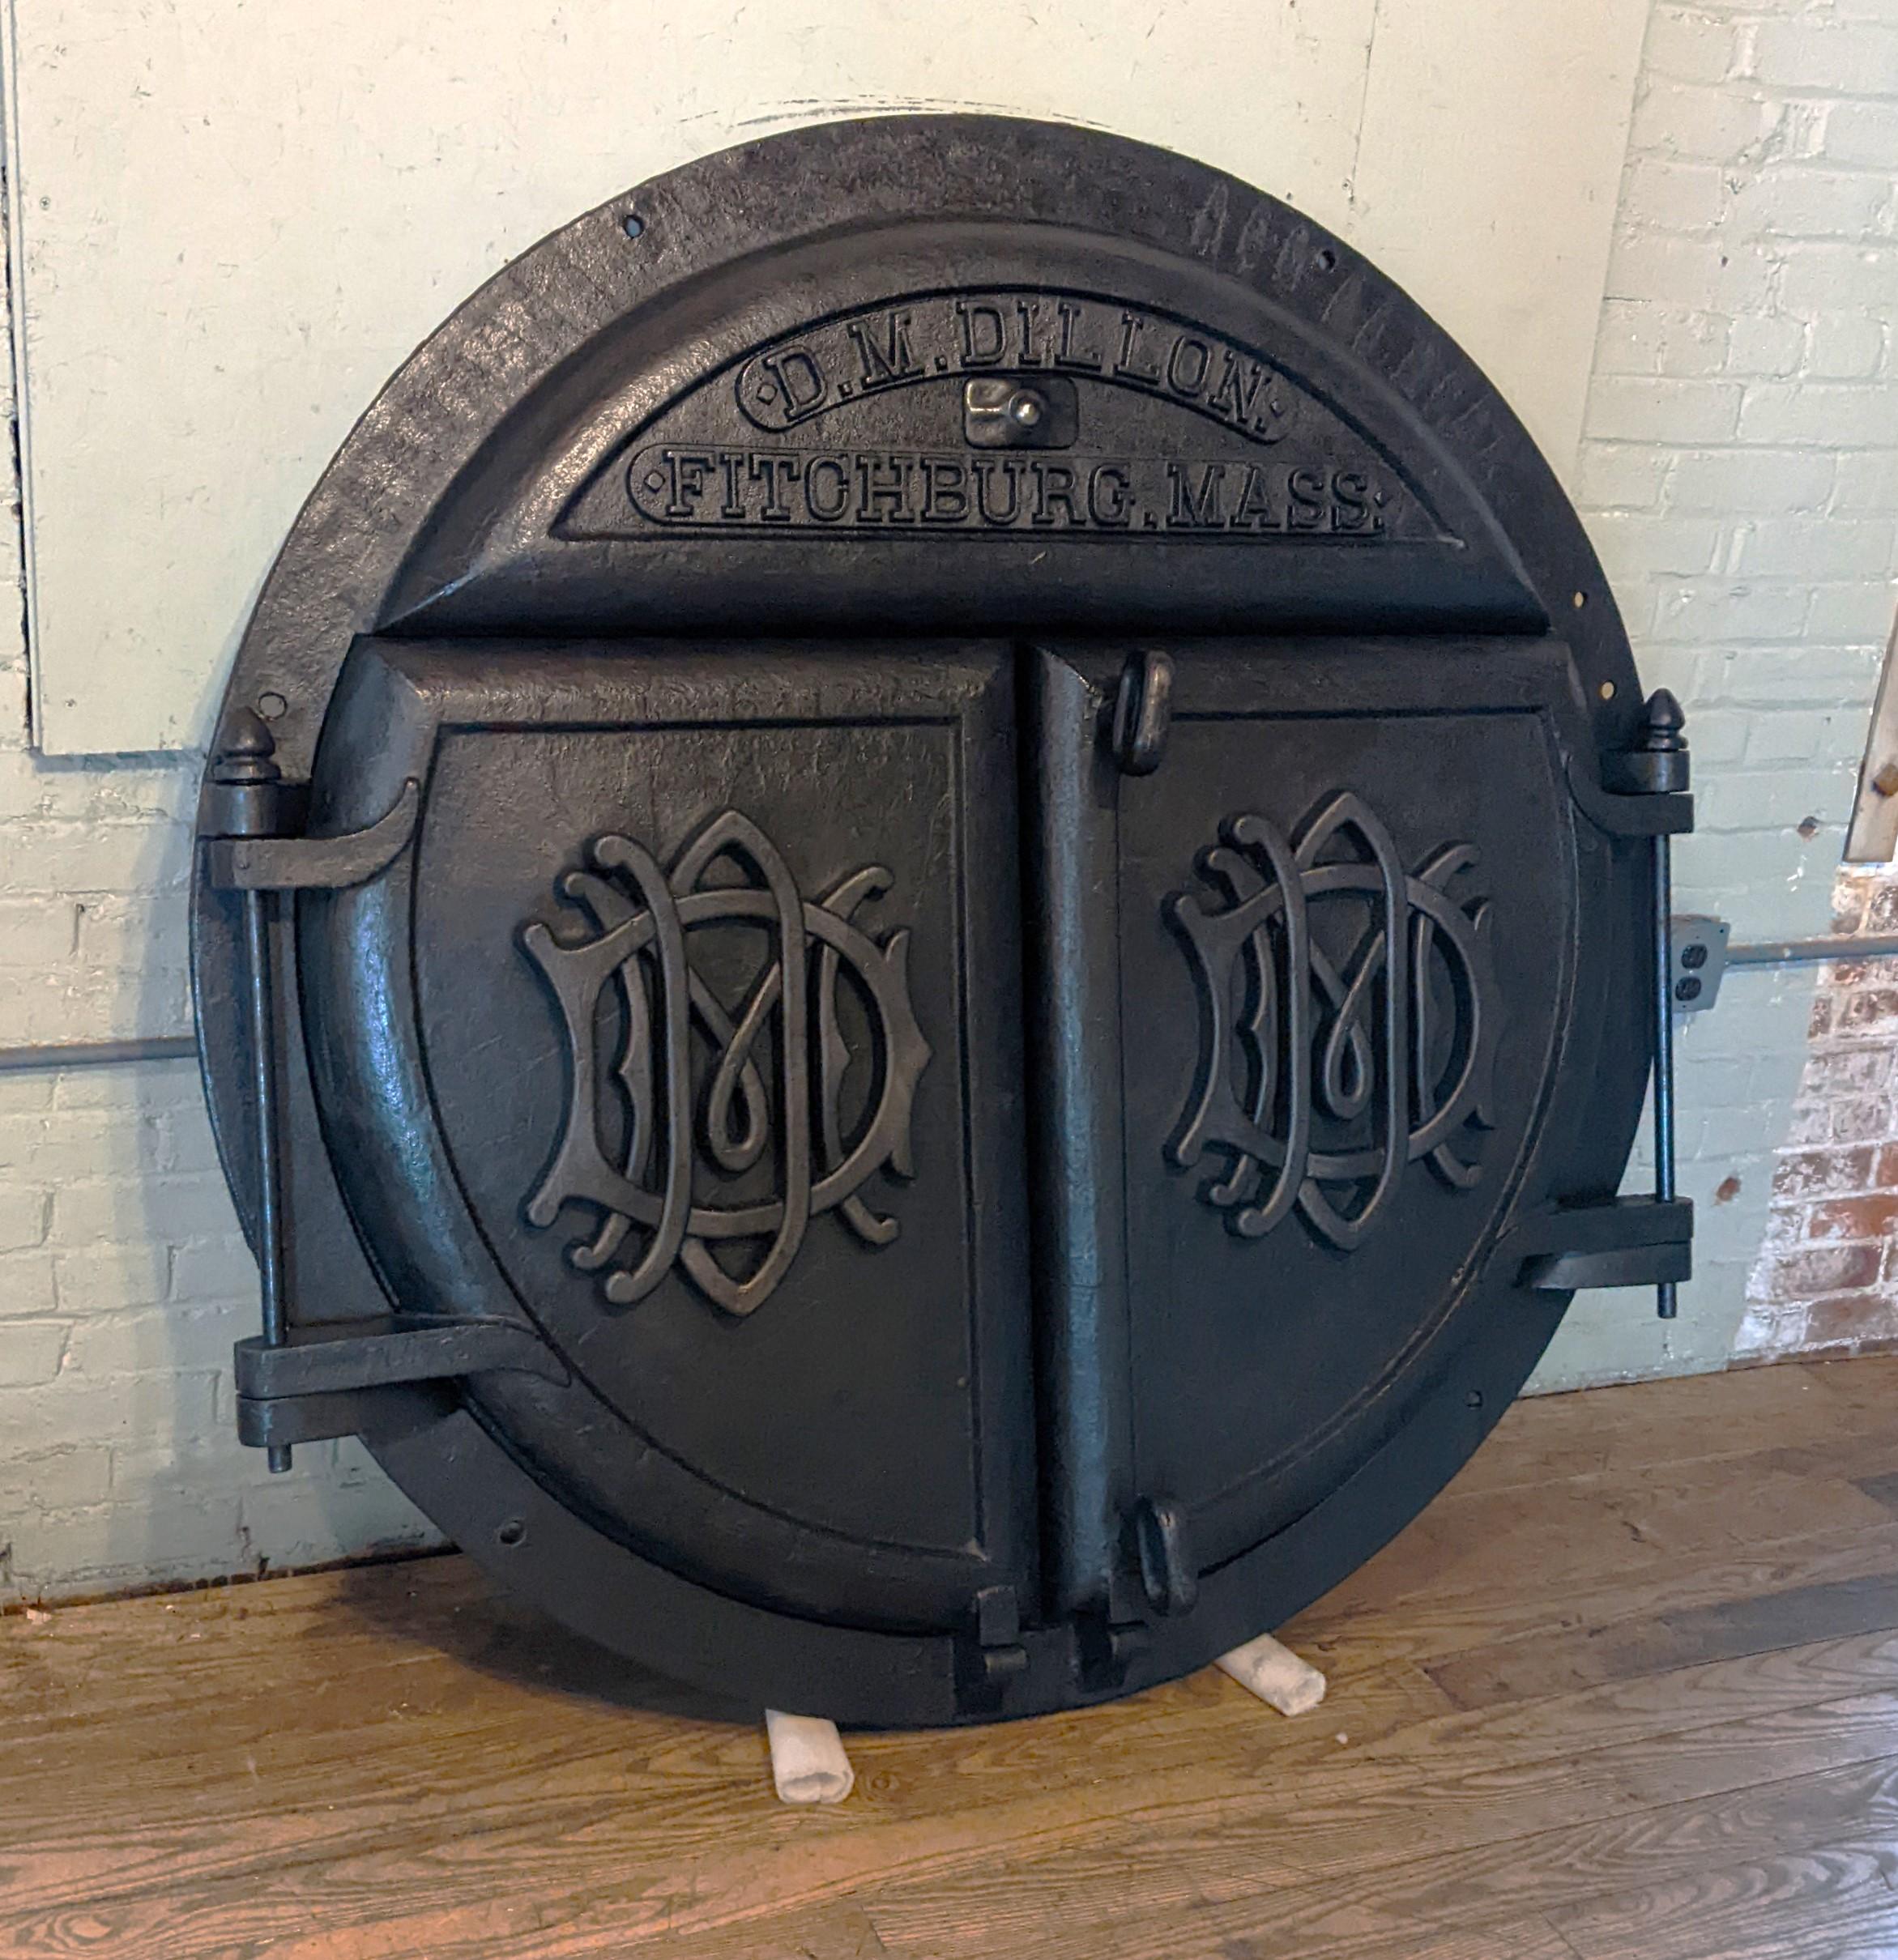 1 Set of Antique D.M Dillon Boiler Doors

Overall Dimensions: 9